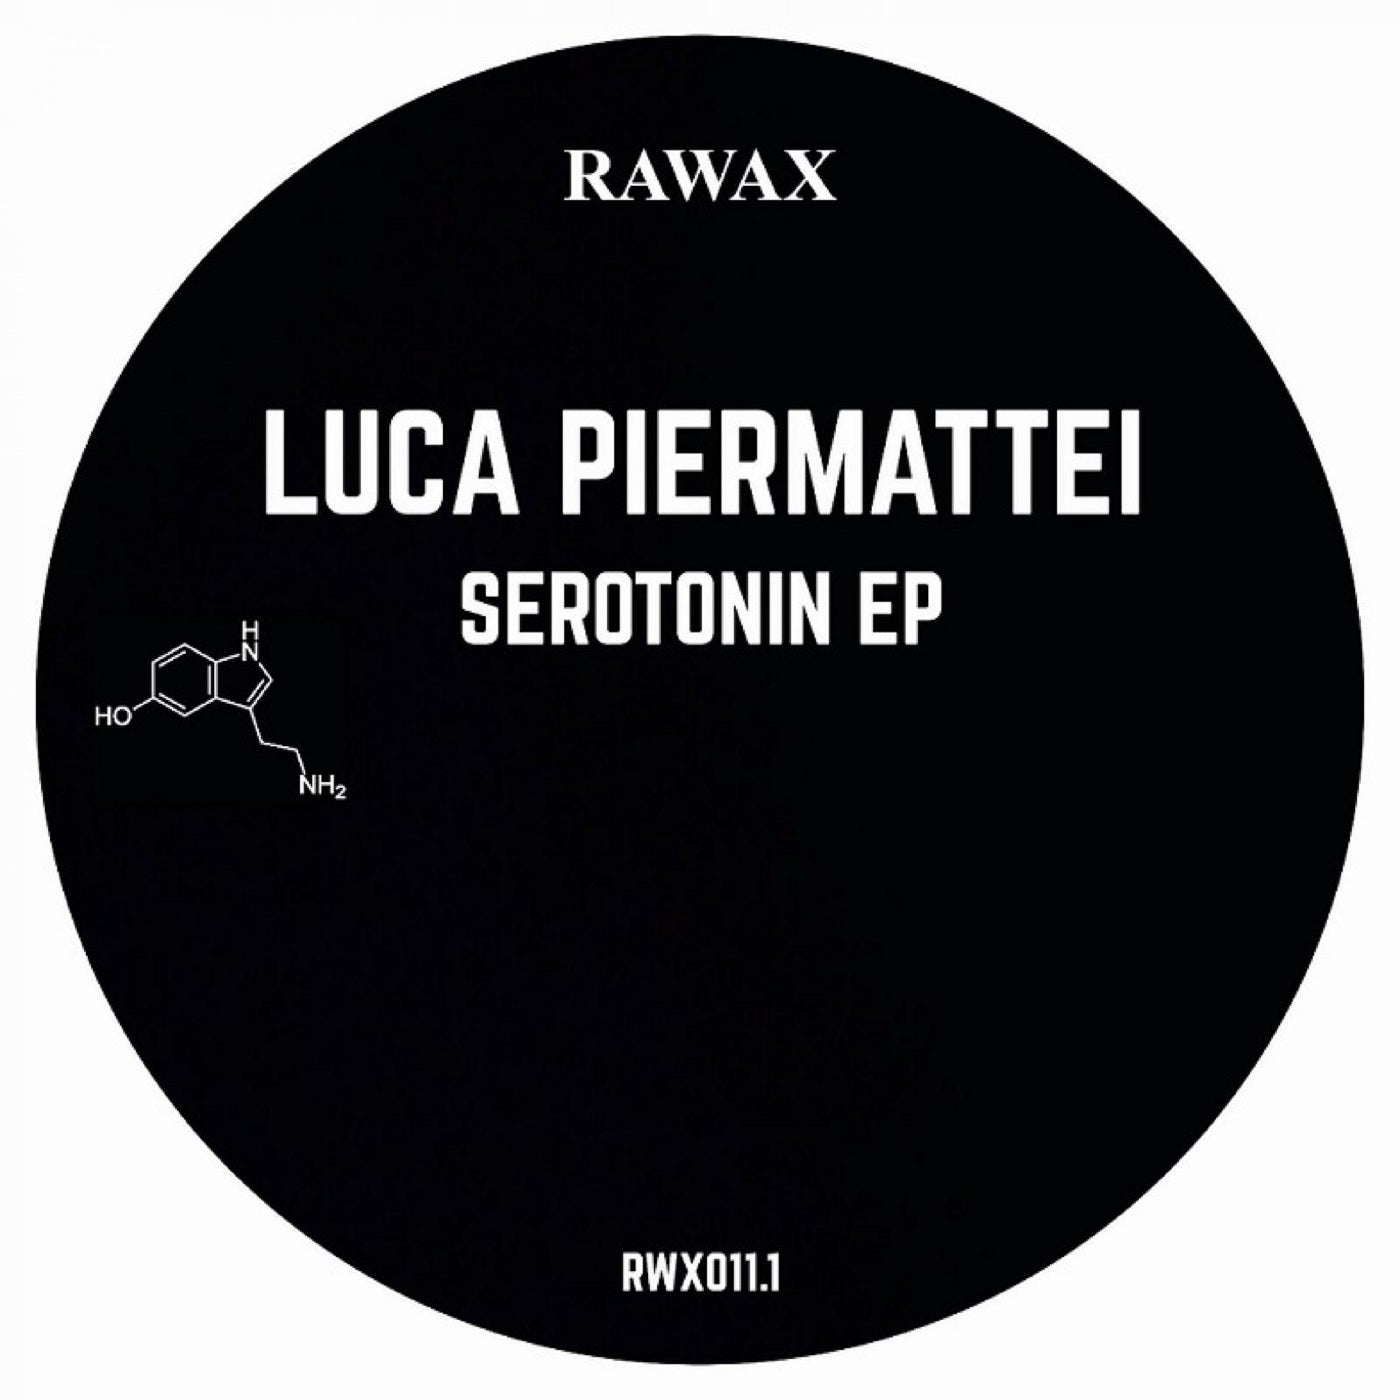 Luca Piermattei – Serotonin EP [RWX011POINT1]